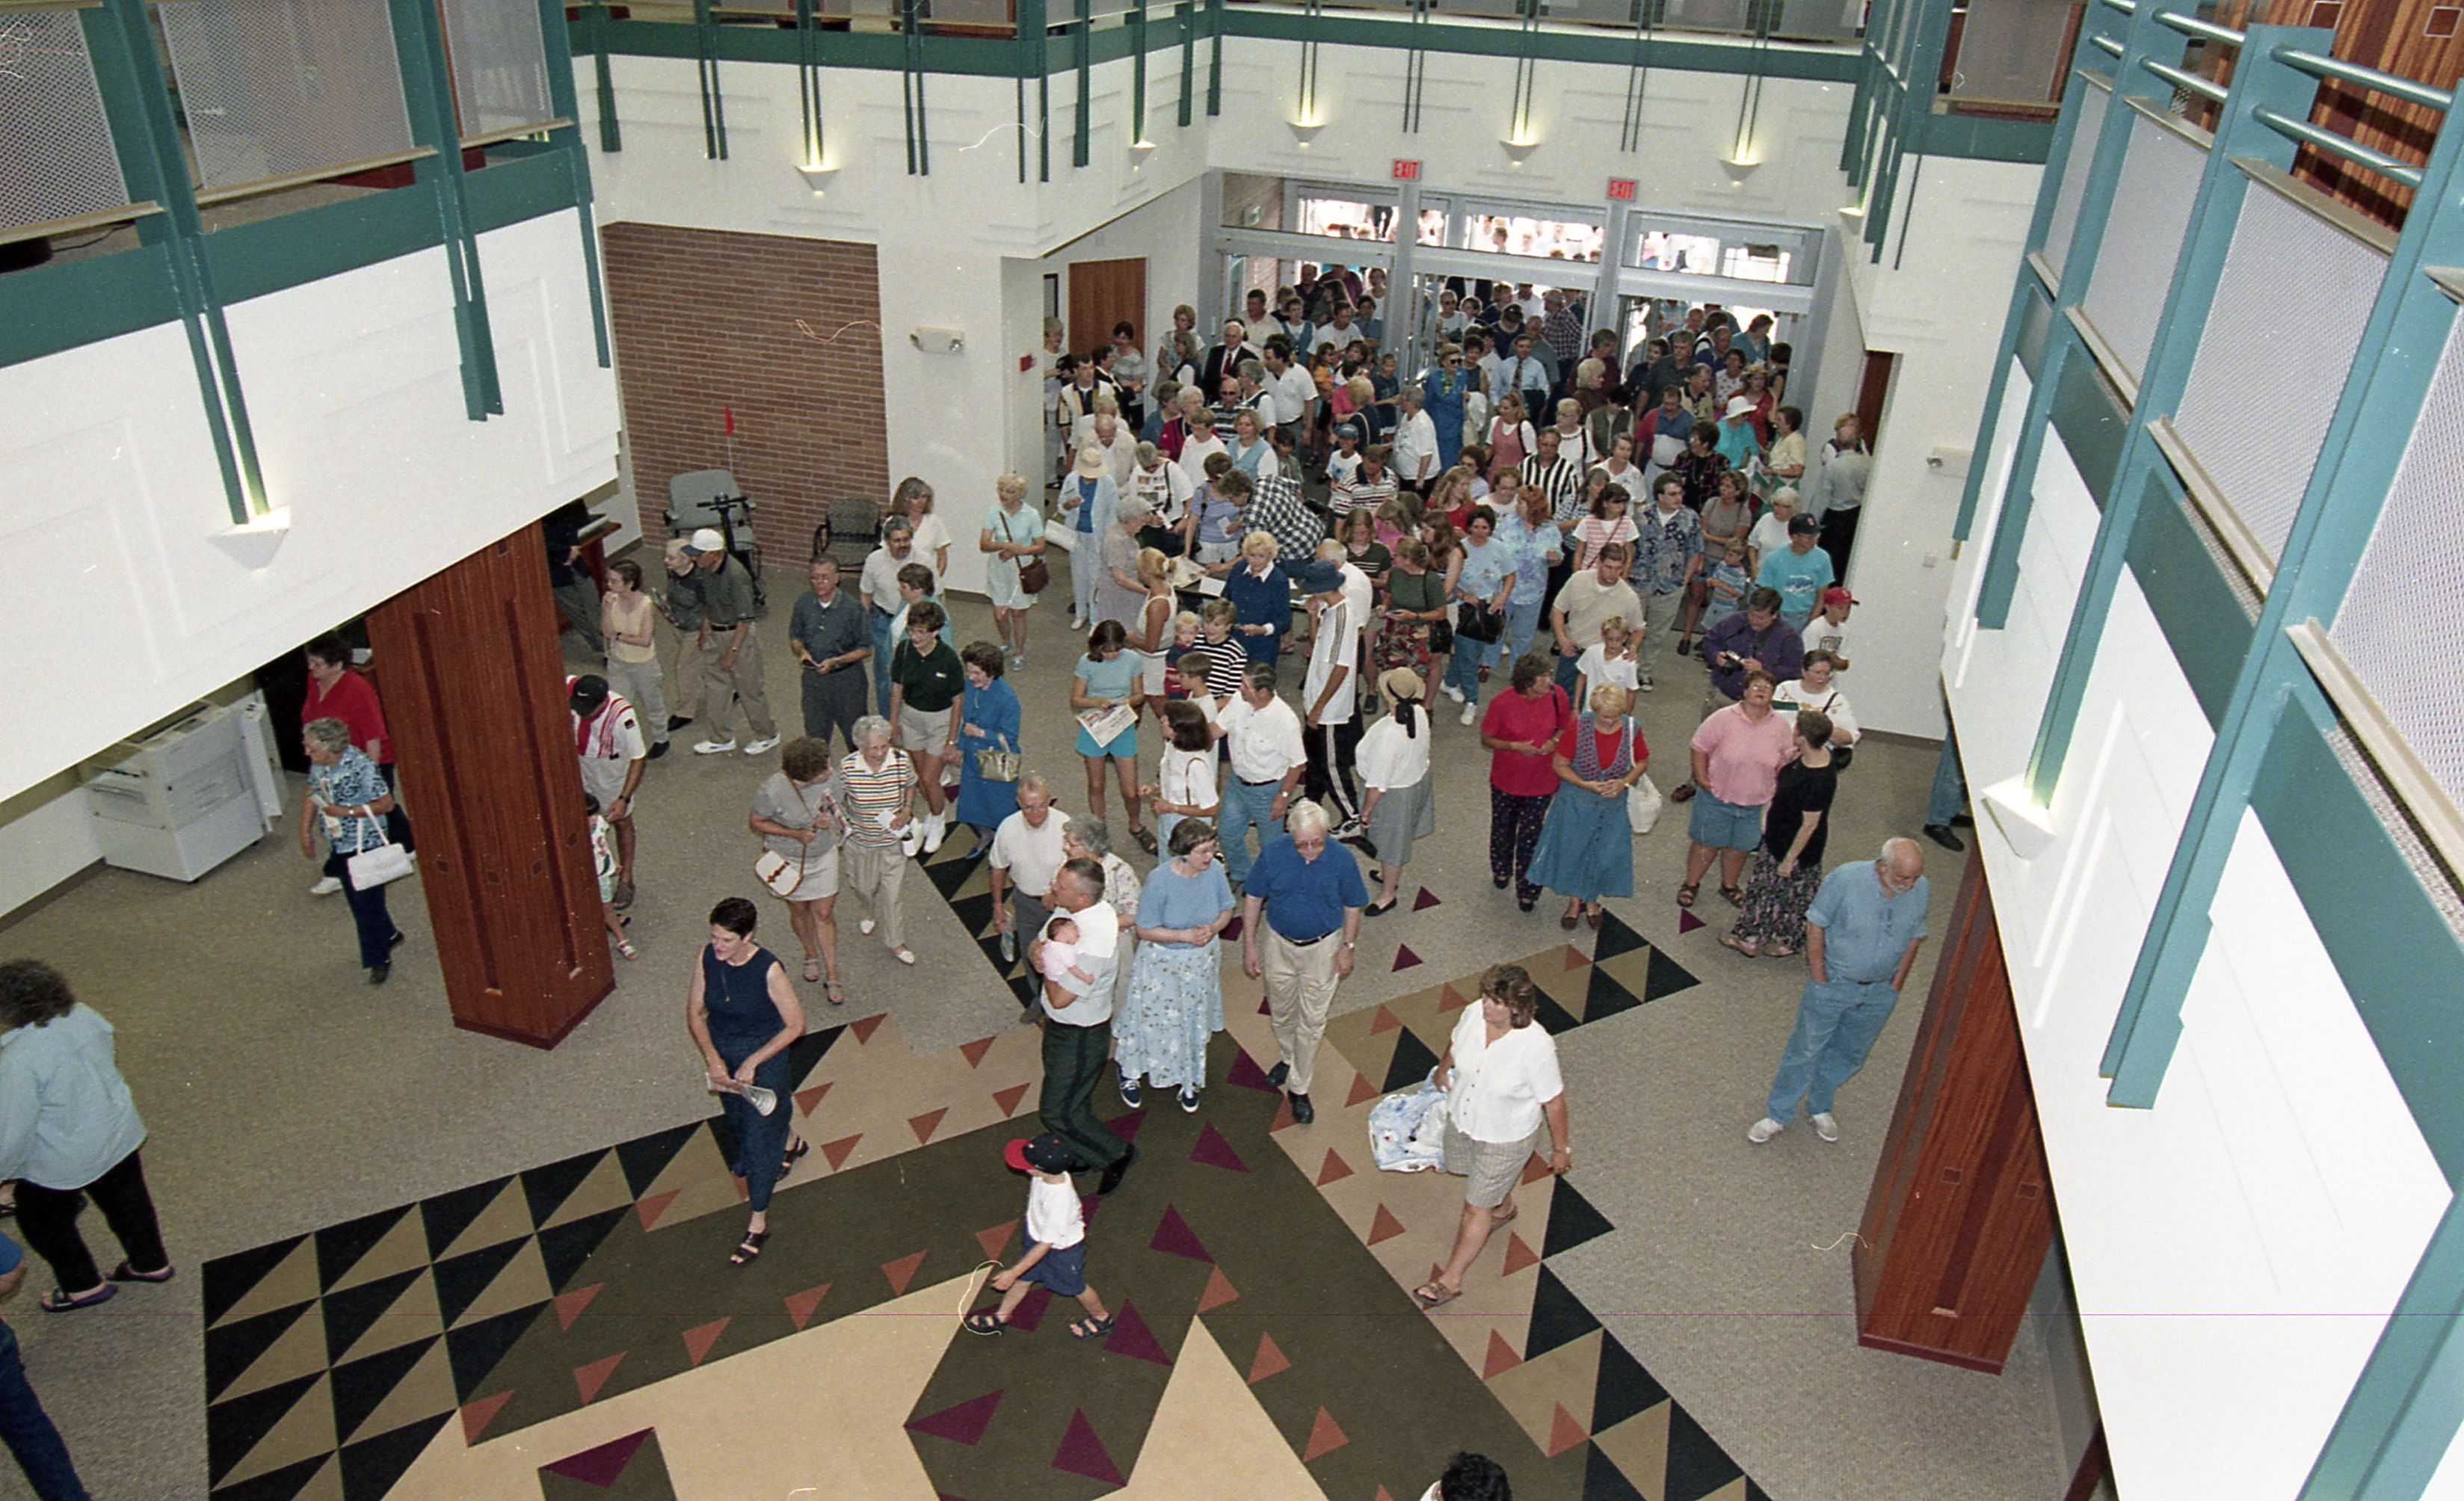 People entering doors of library